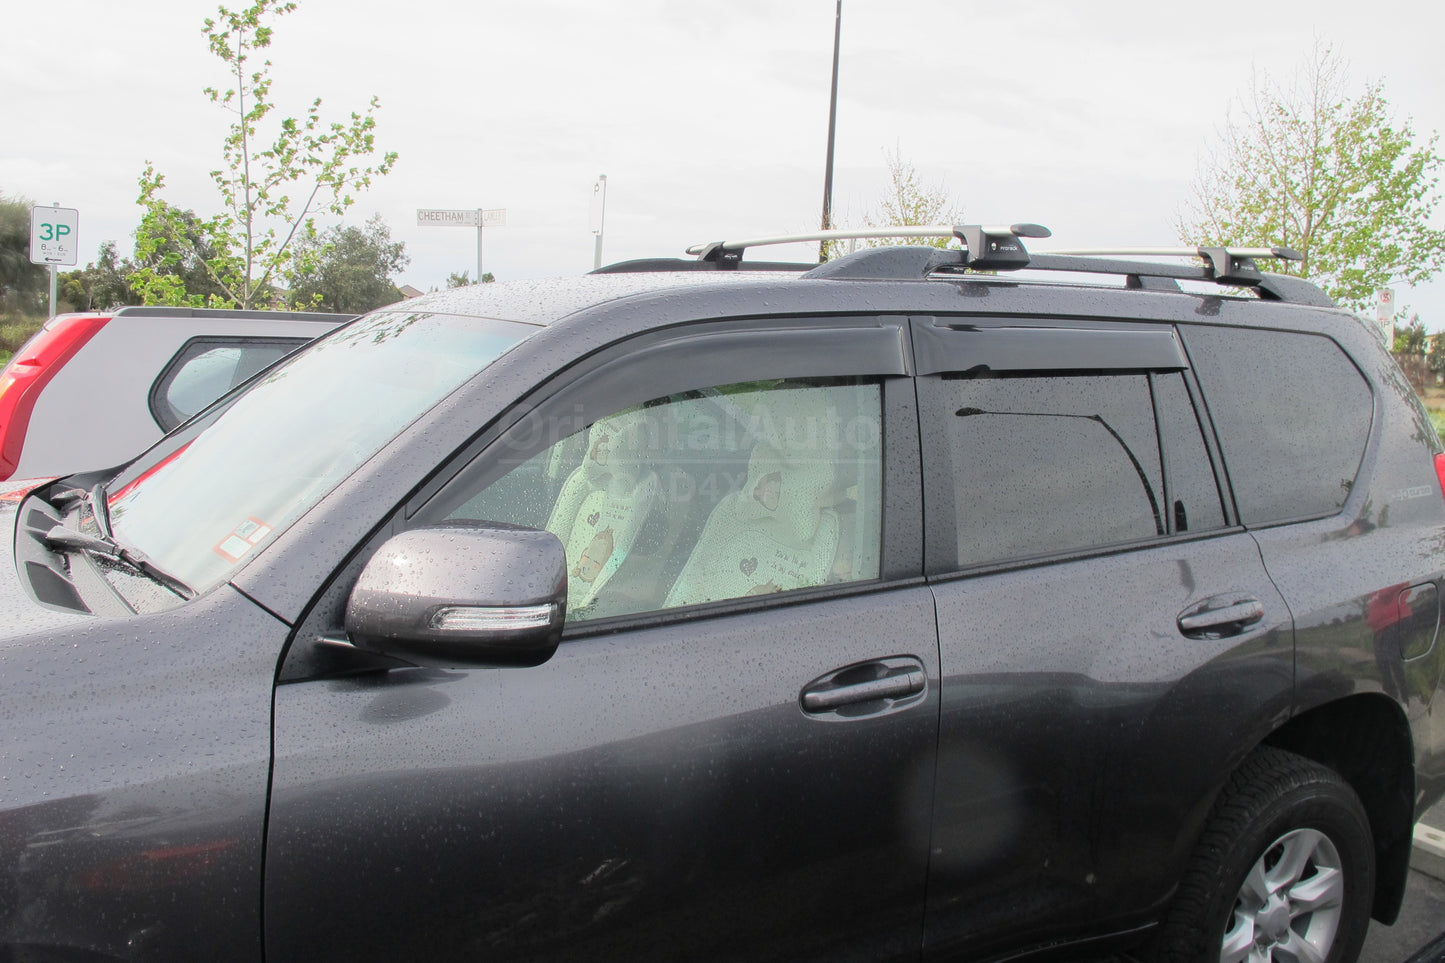 Injection Modeling Bonnet Protector & Weathershield for Toyota Land Cruiser Prado 150 2018+ Hood ProtectorGuard Weather Shields Window Visor